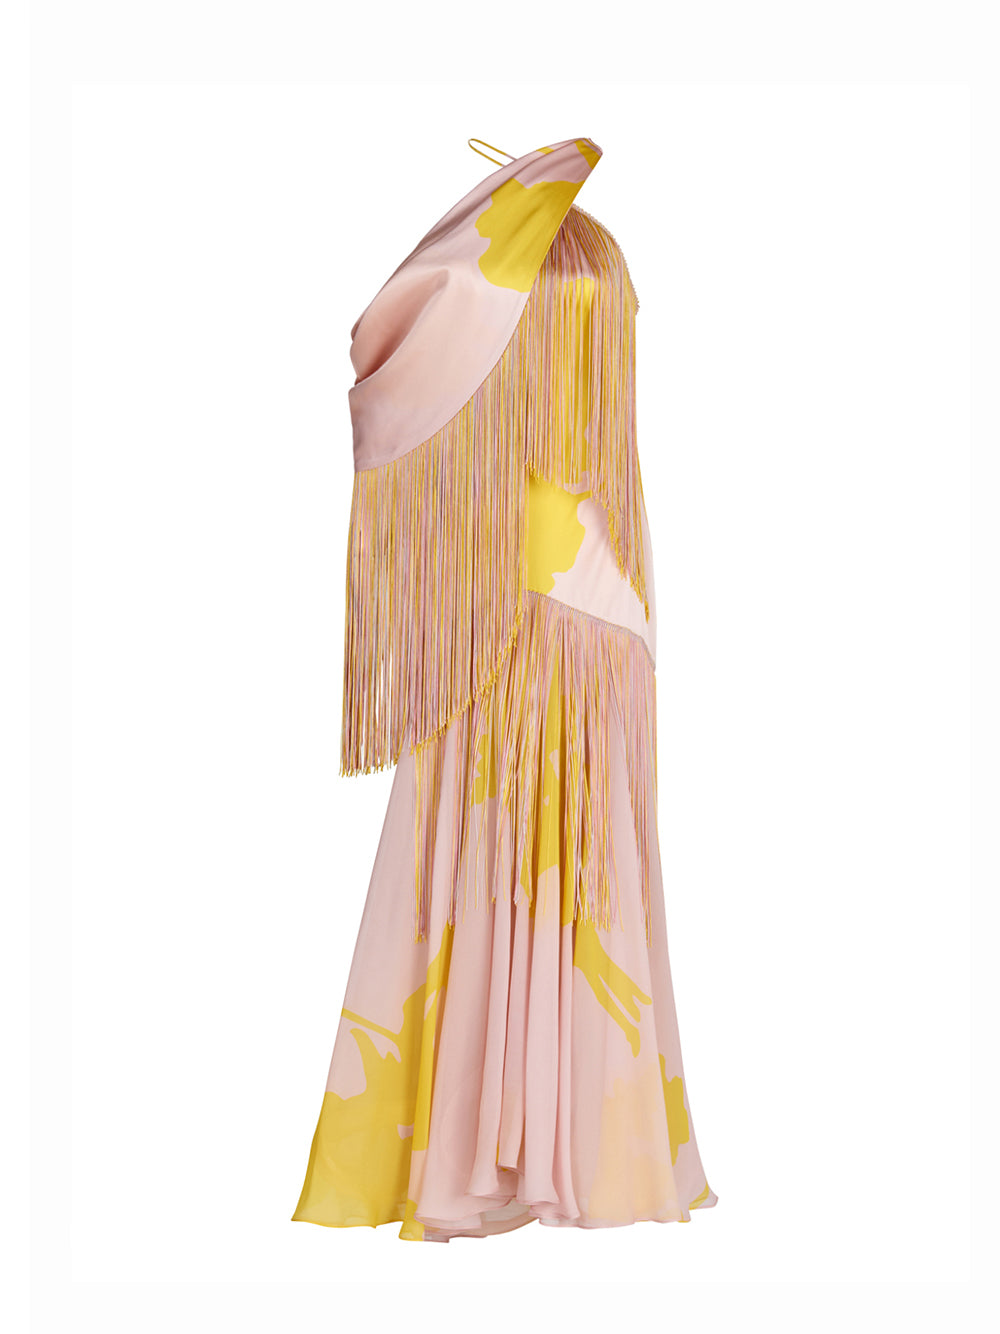 Parma Dress (Yellow-Nude Floral Breeze)